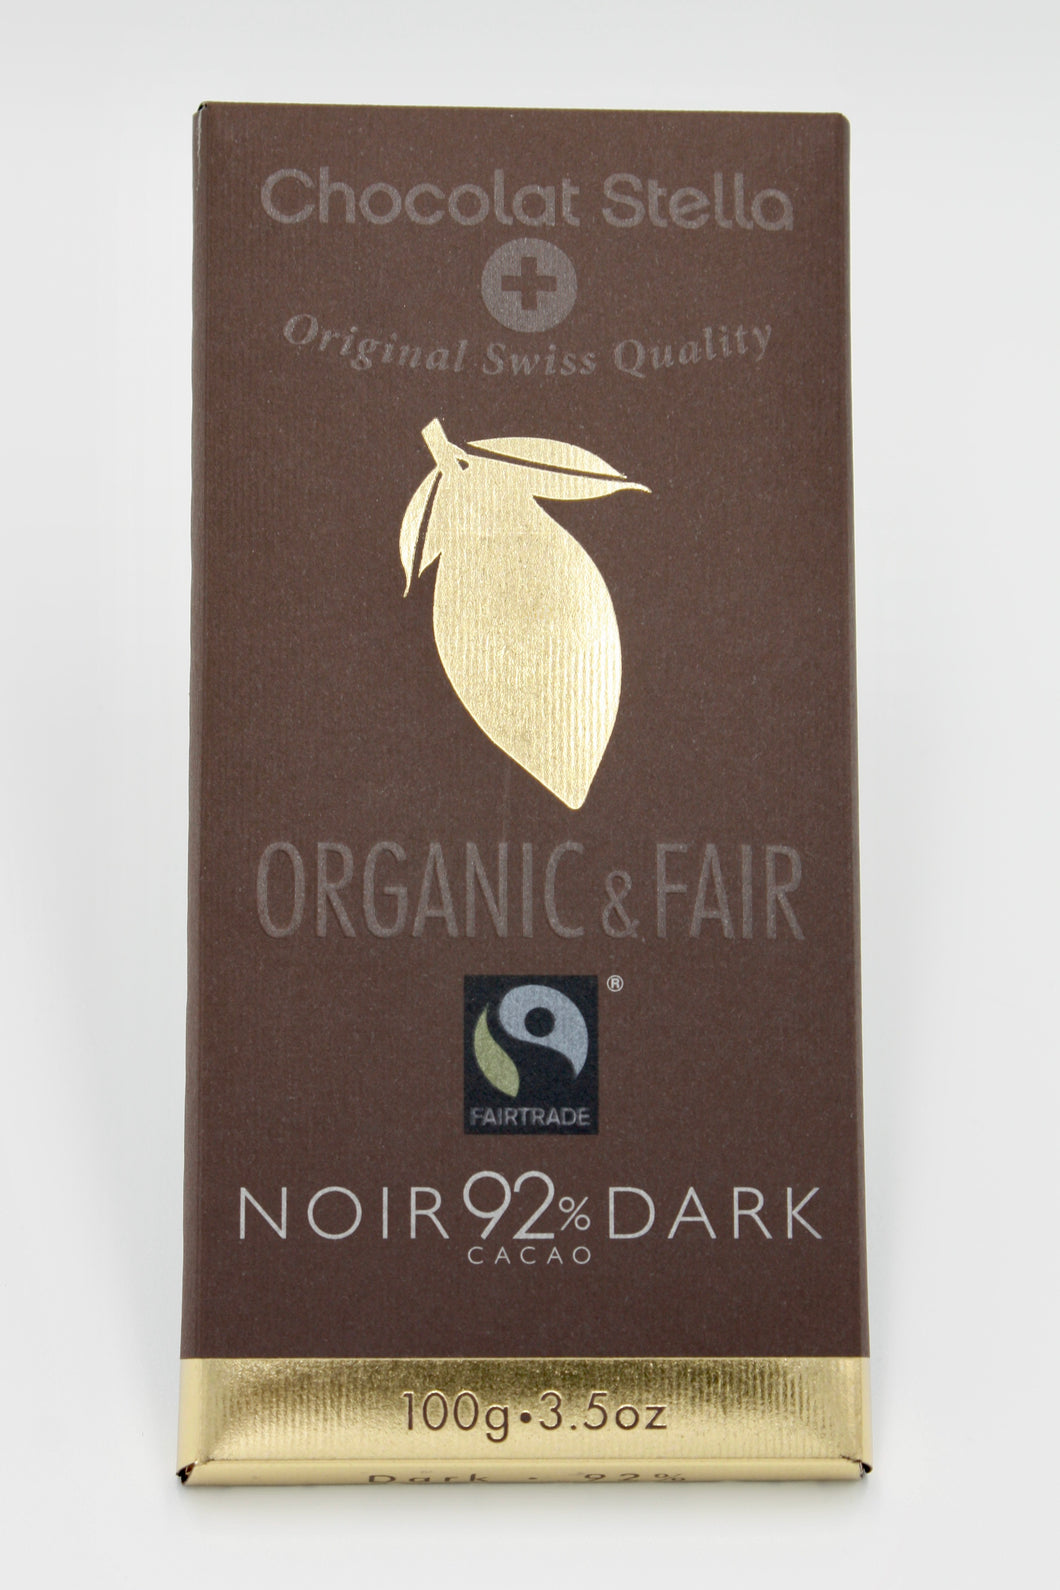 Organic Swiss Dark Chocolate Bar with 92% Cacao